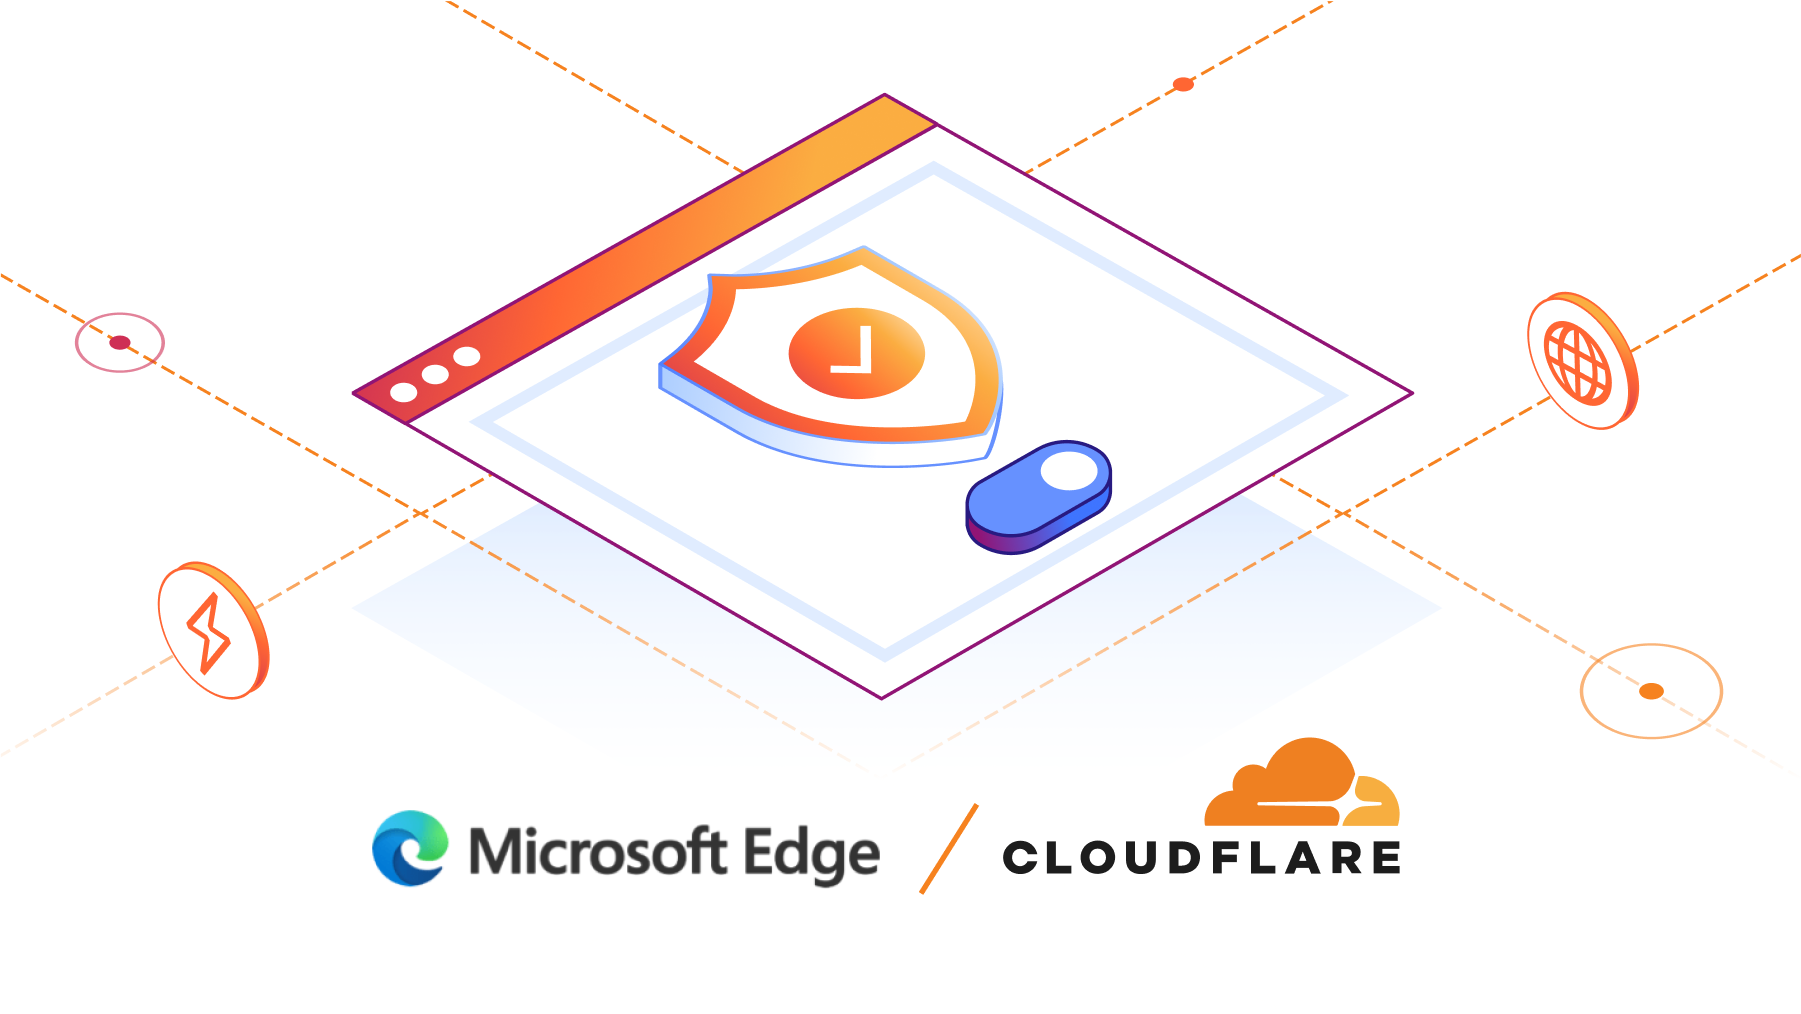 CloudflareがMicrosoft Edge Secure Networkを強化
